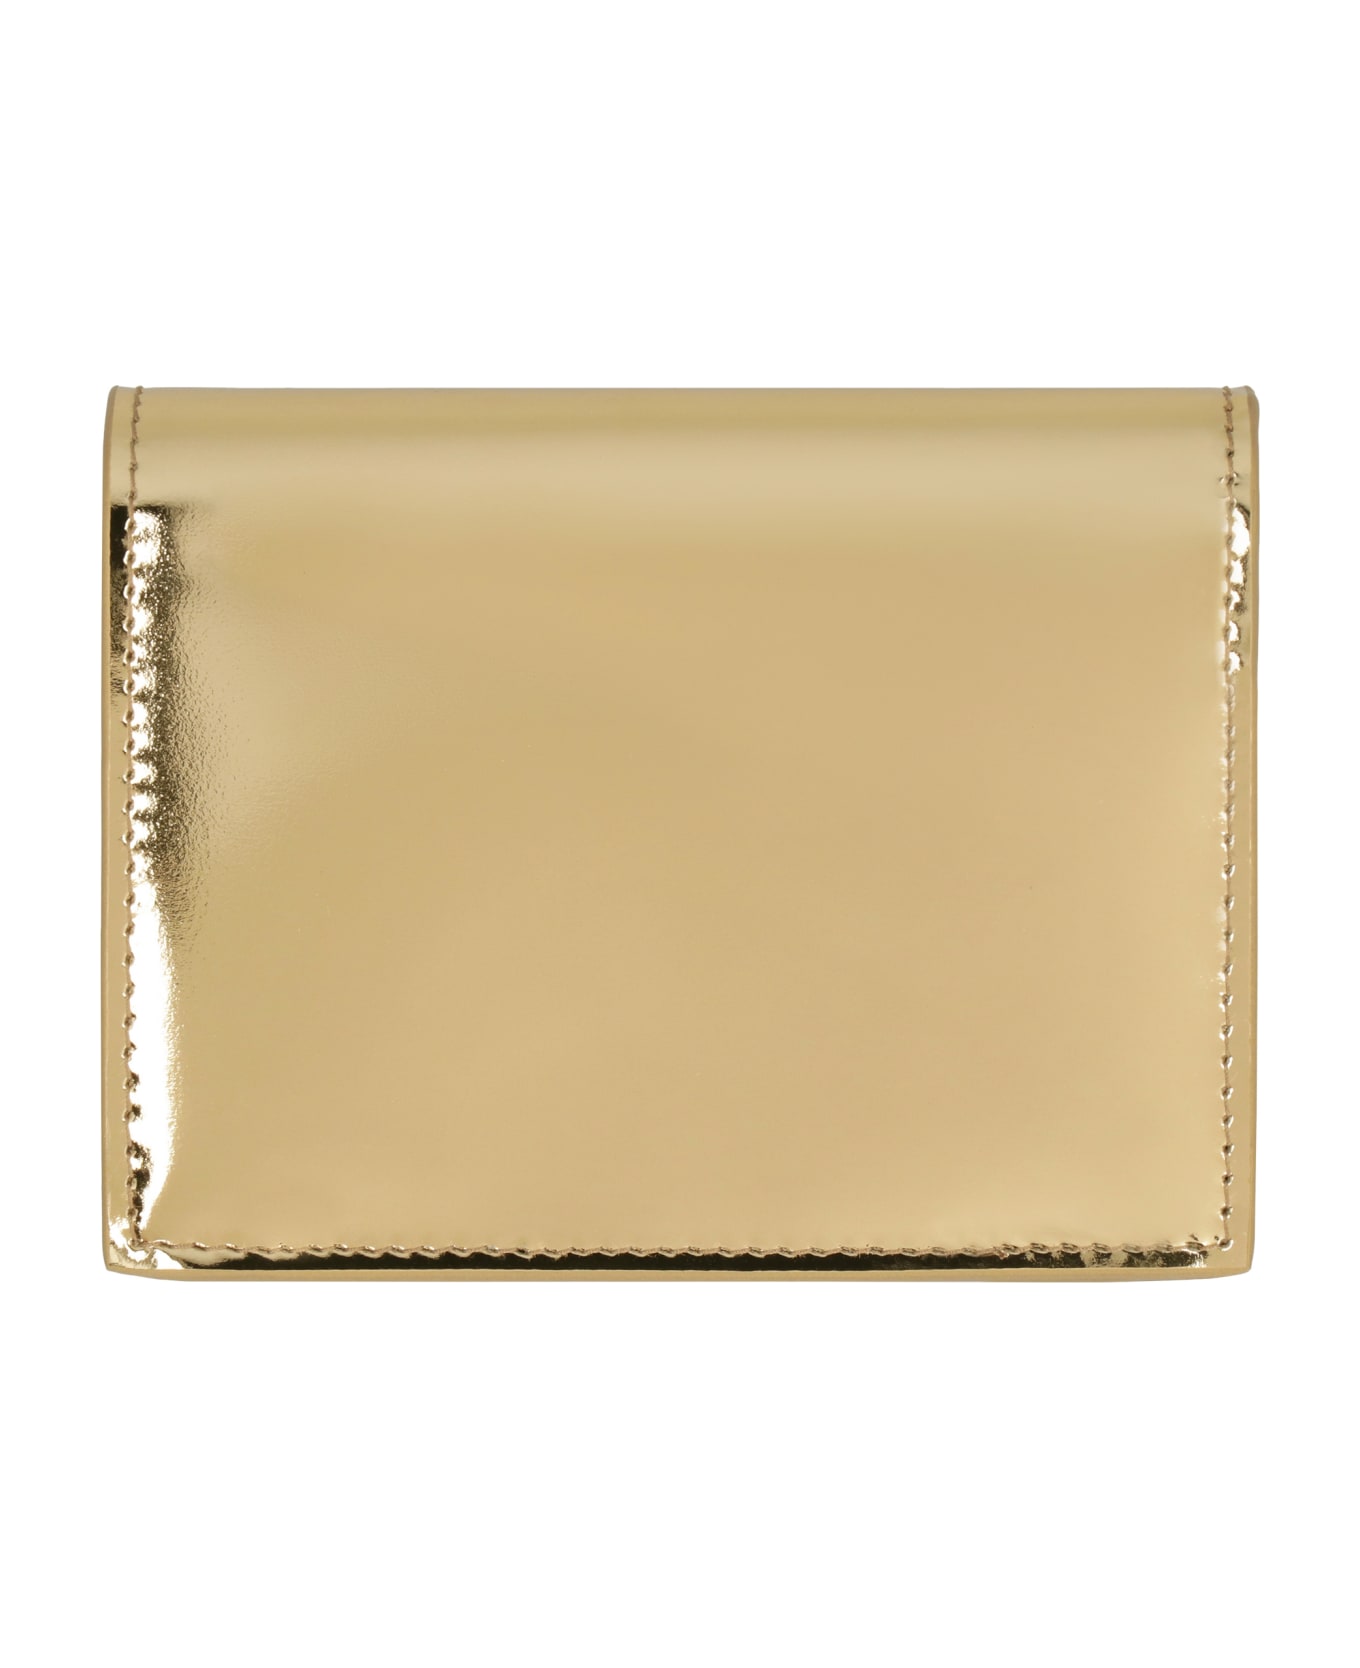 Prada Metallic Leather Wallet - Gold